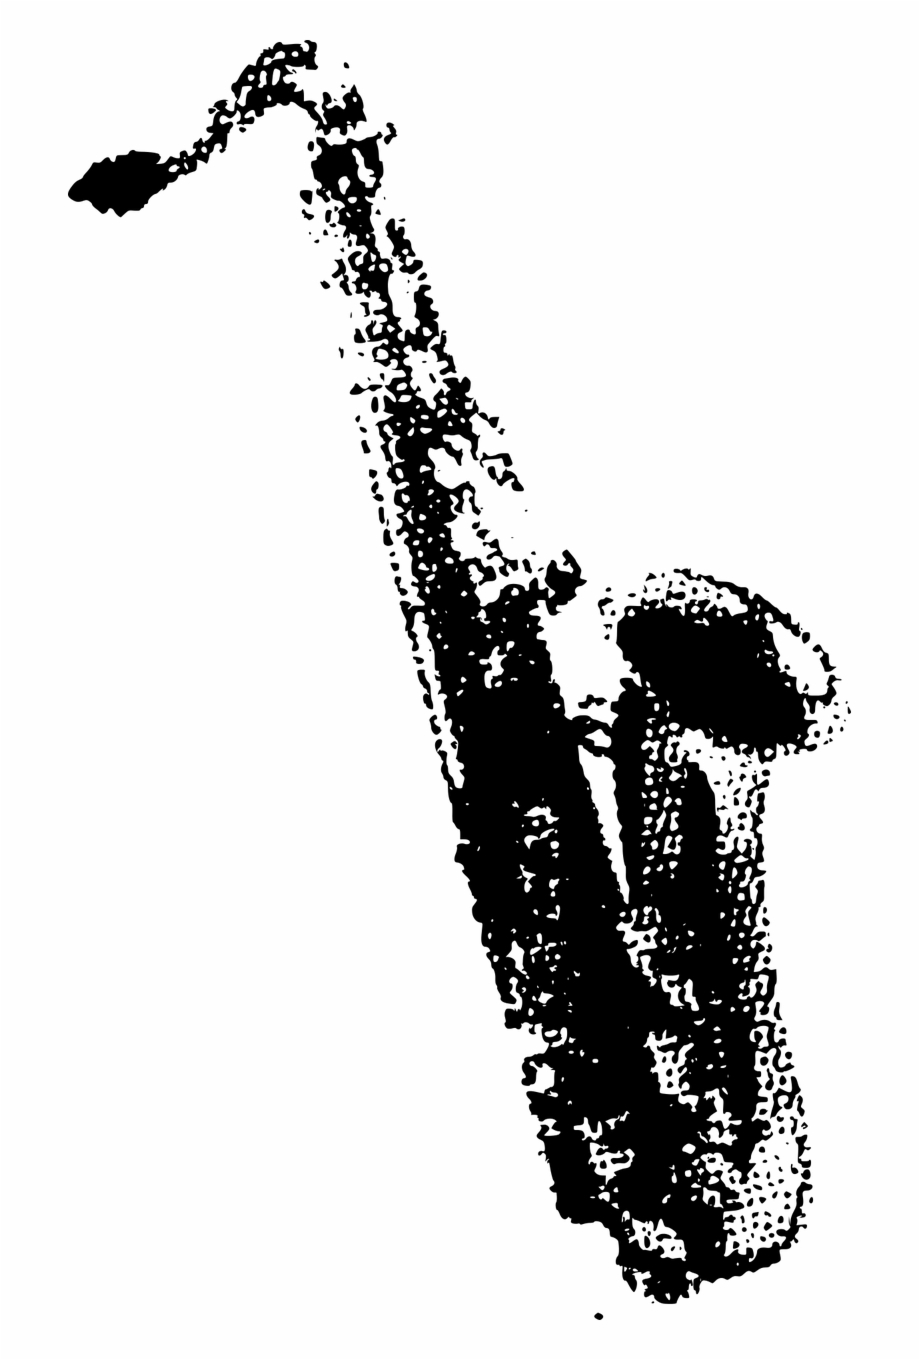 Saxophone
